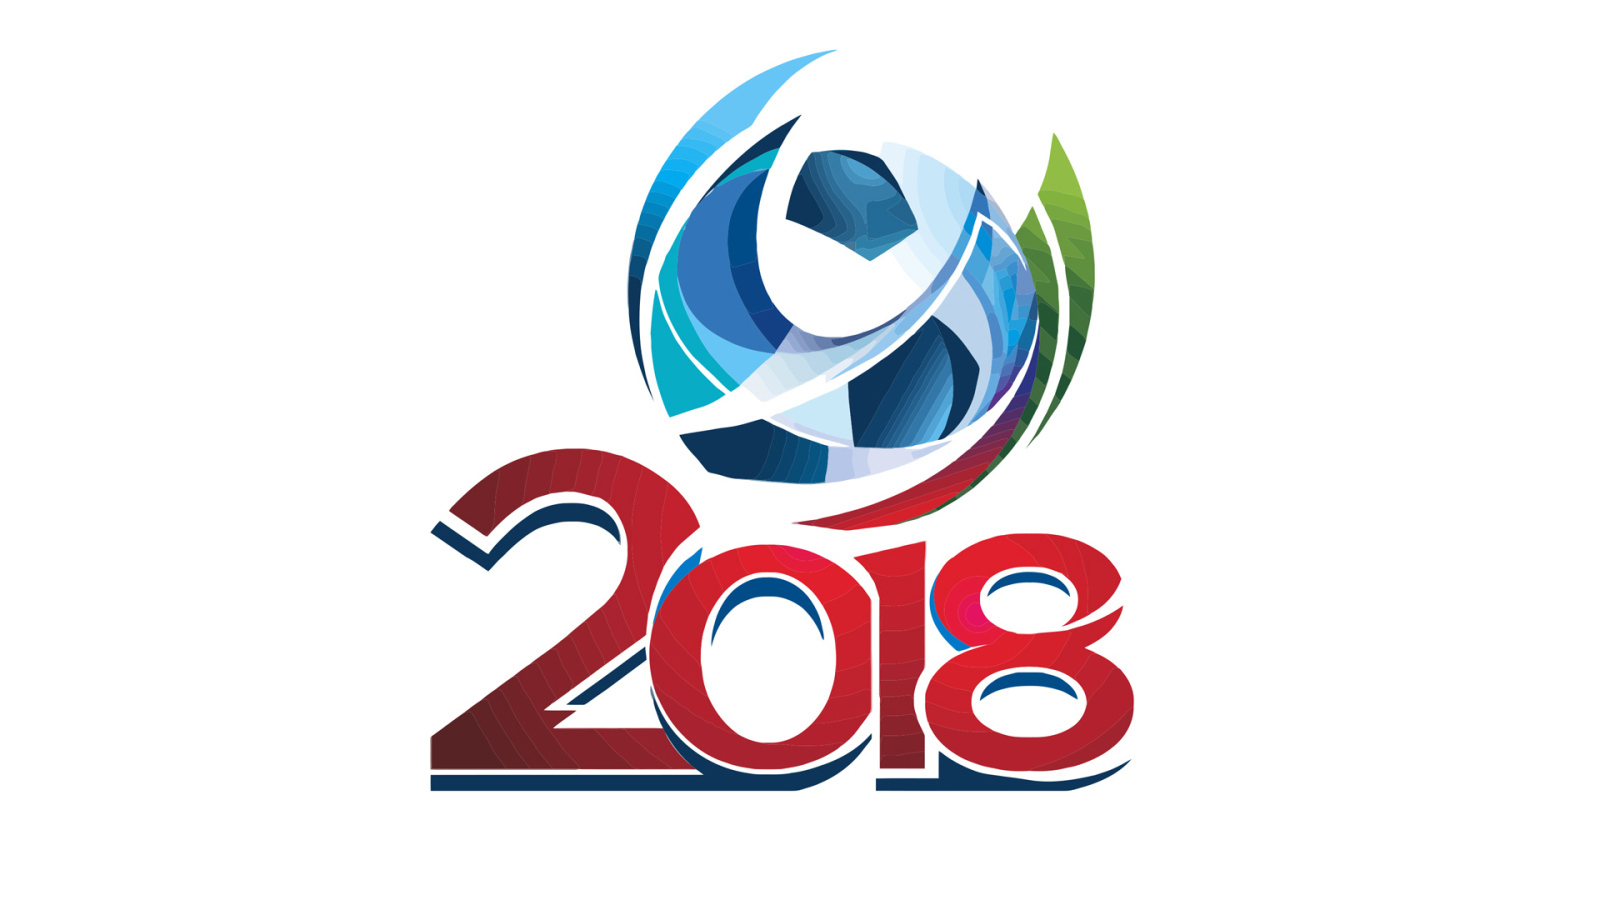 Logo Cup 2018 white world